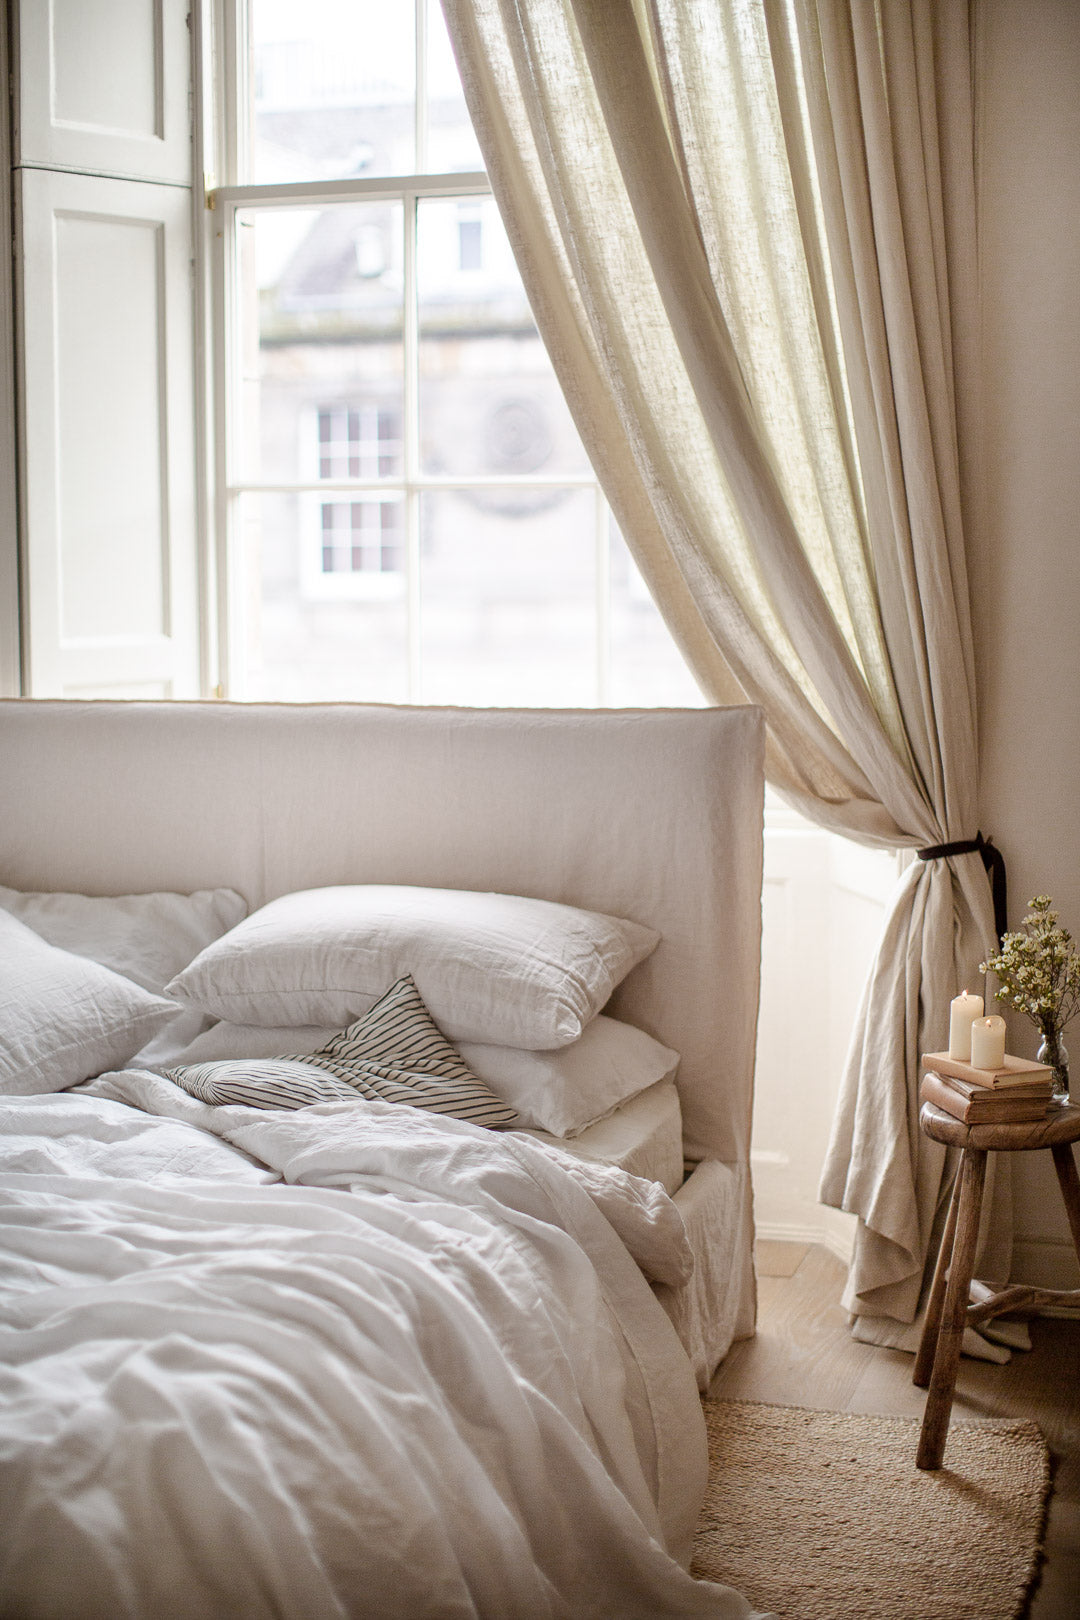 Belgian linen bedding in white and cream 